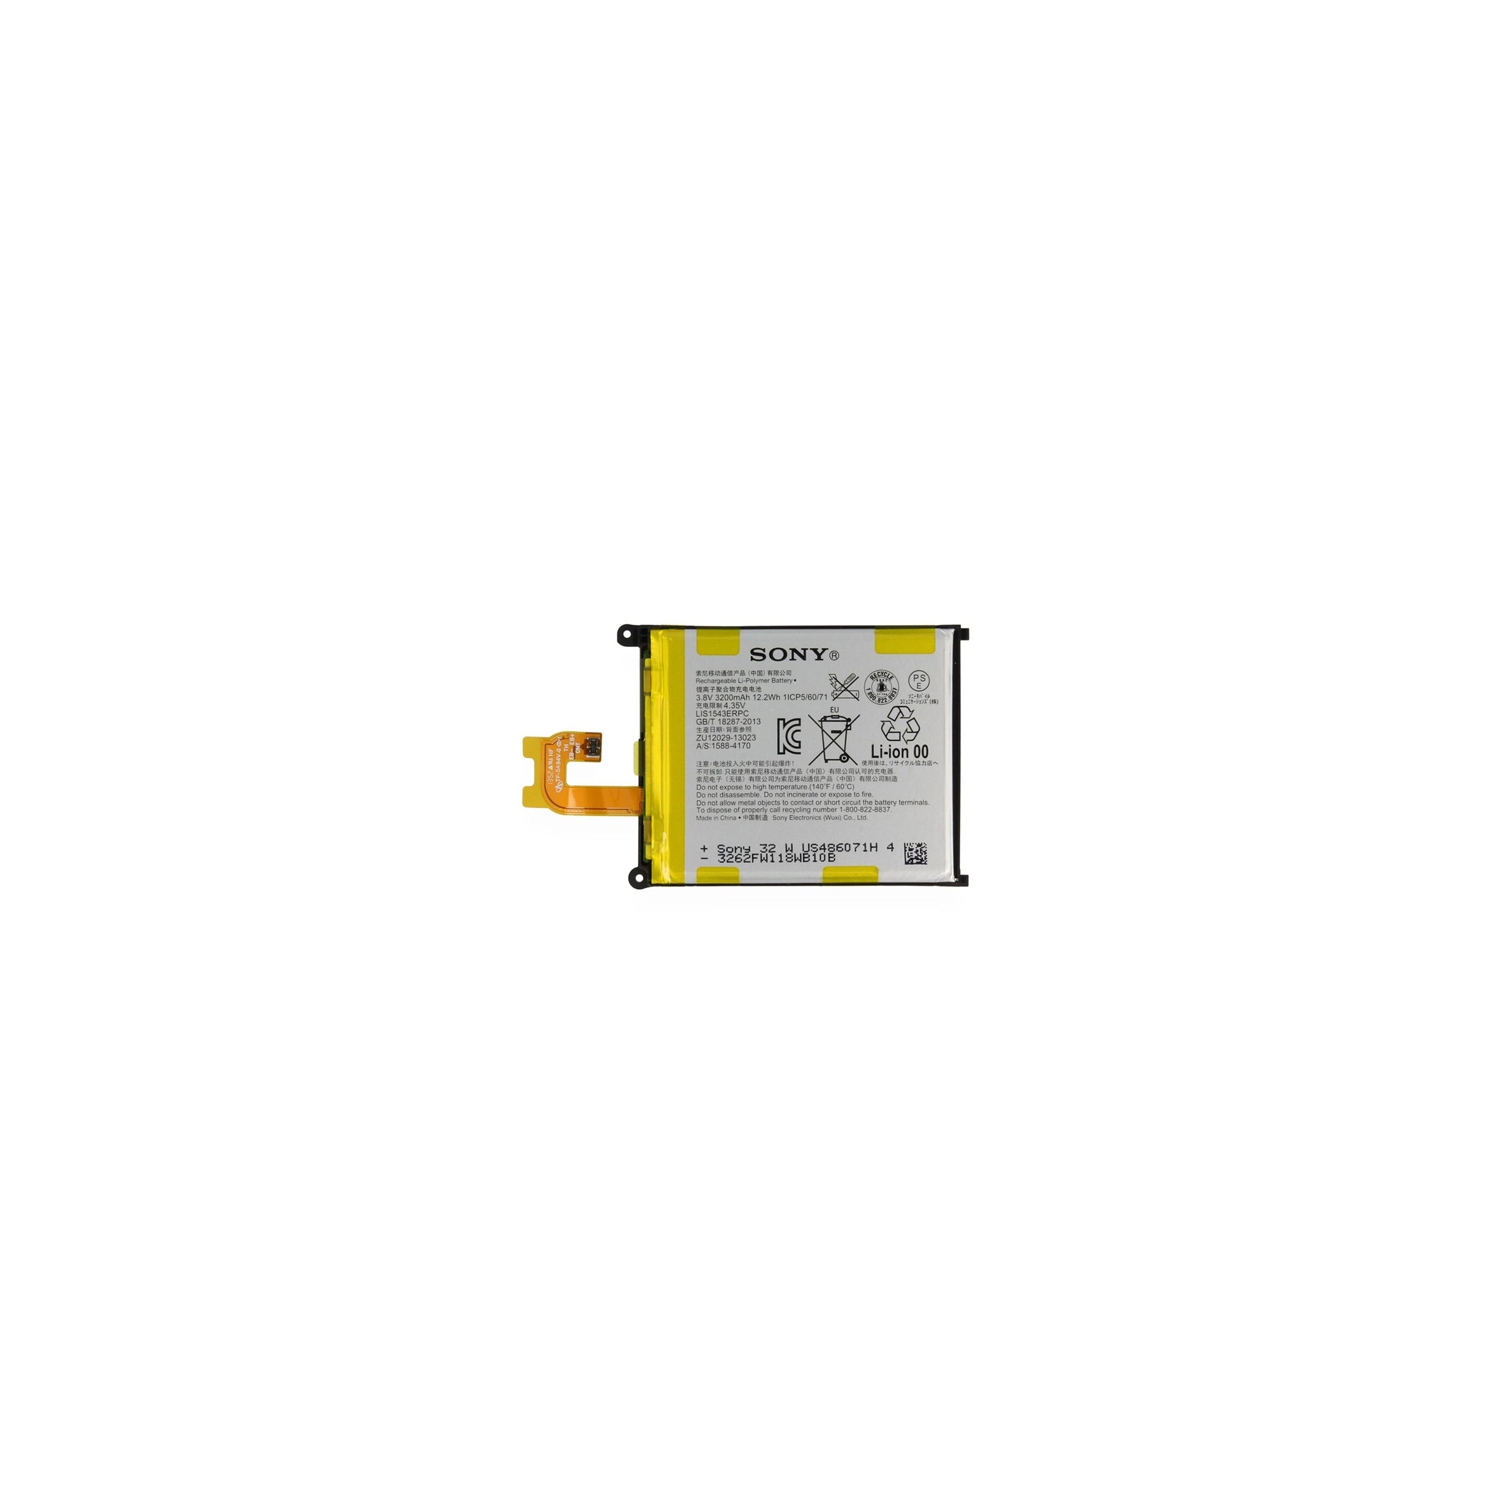 Sony Xperia Z2 Battery – LIS1543ERPC